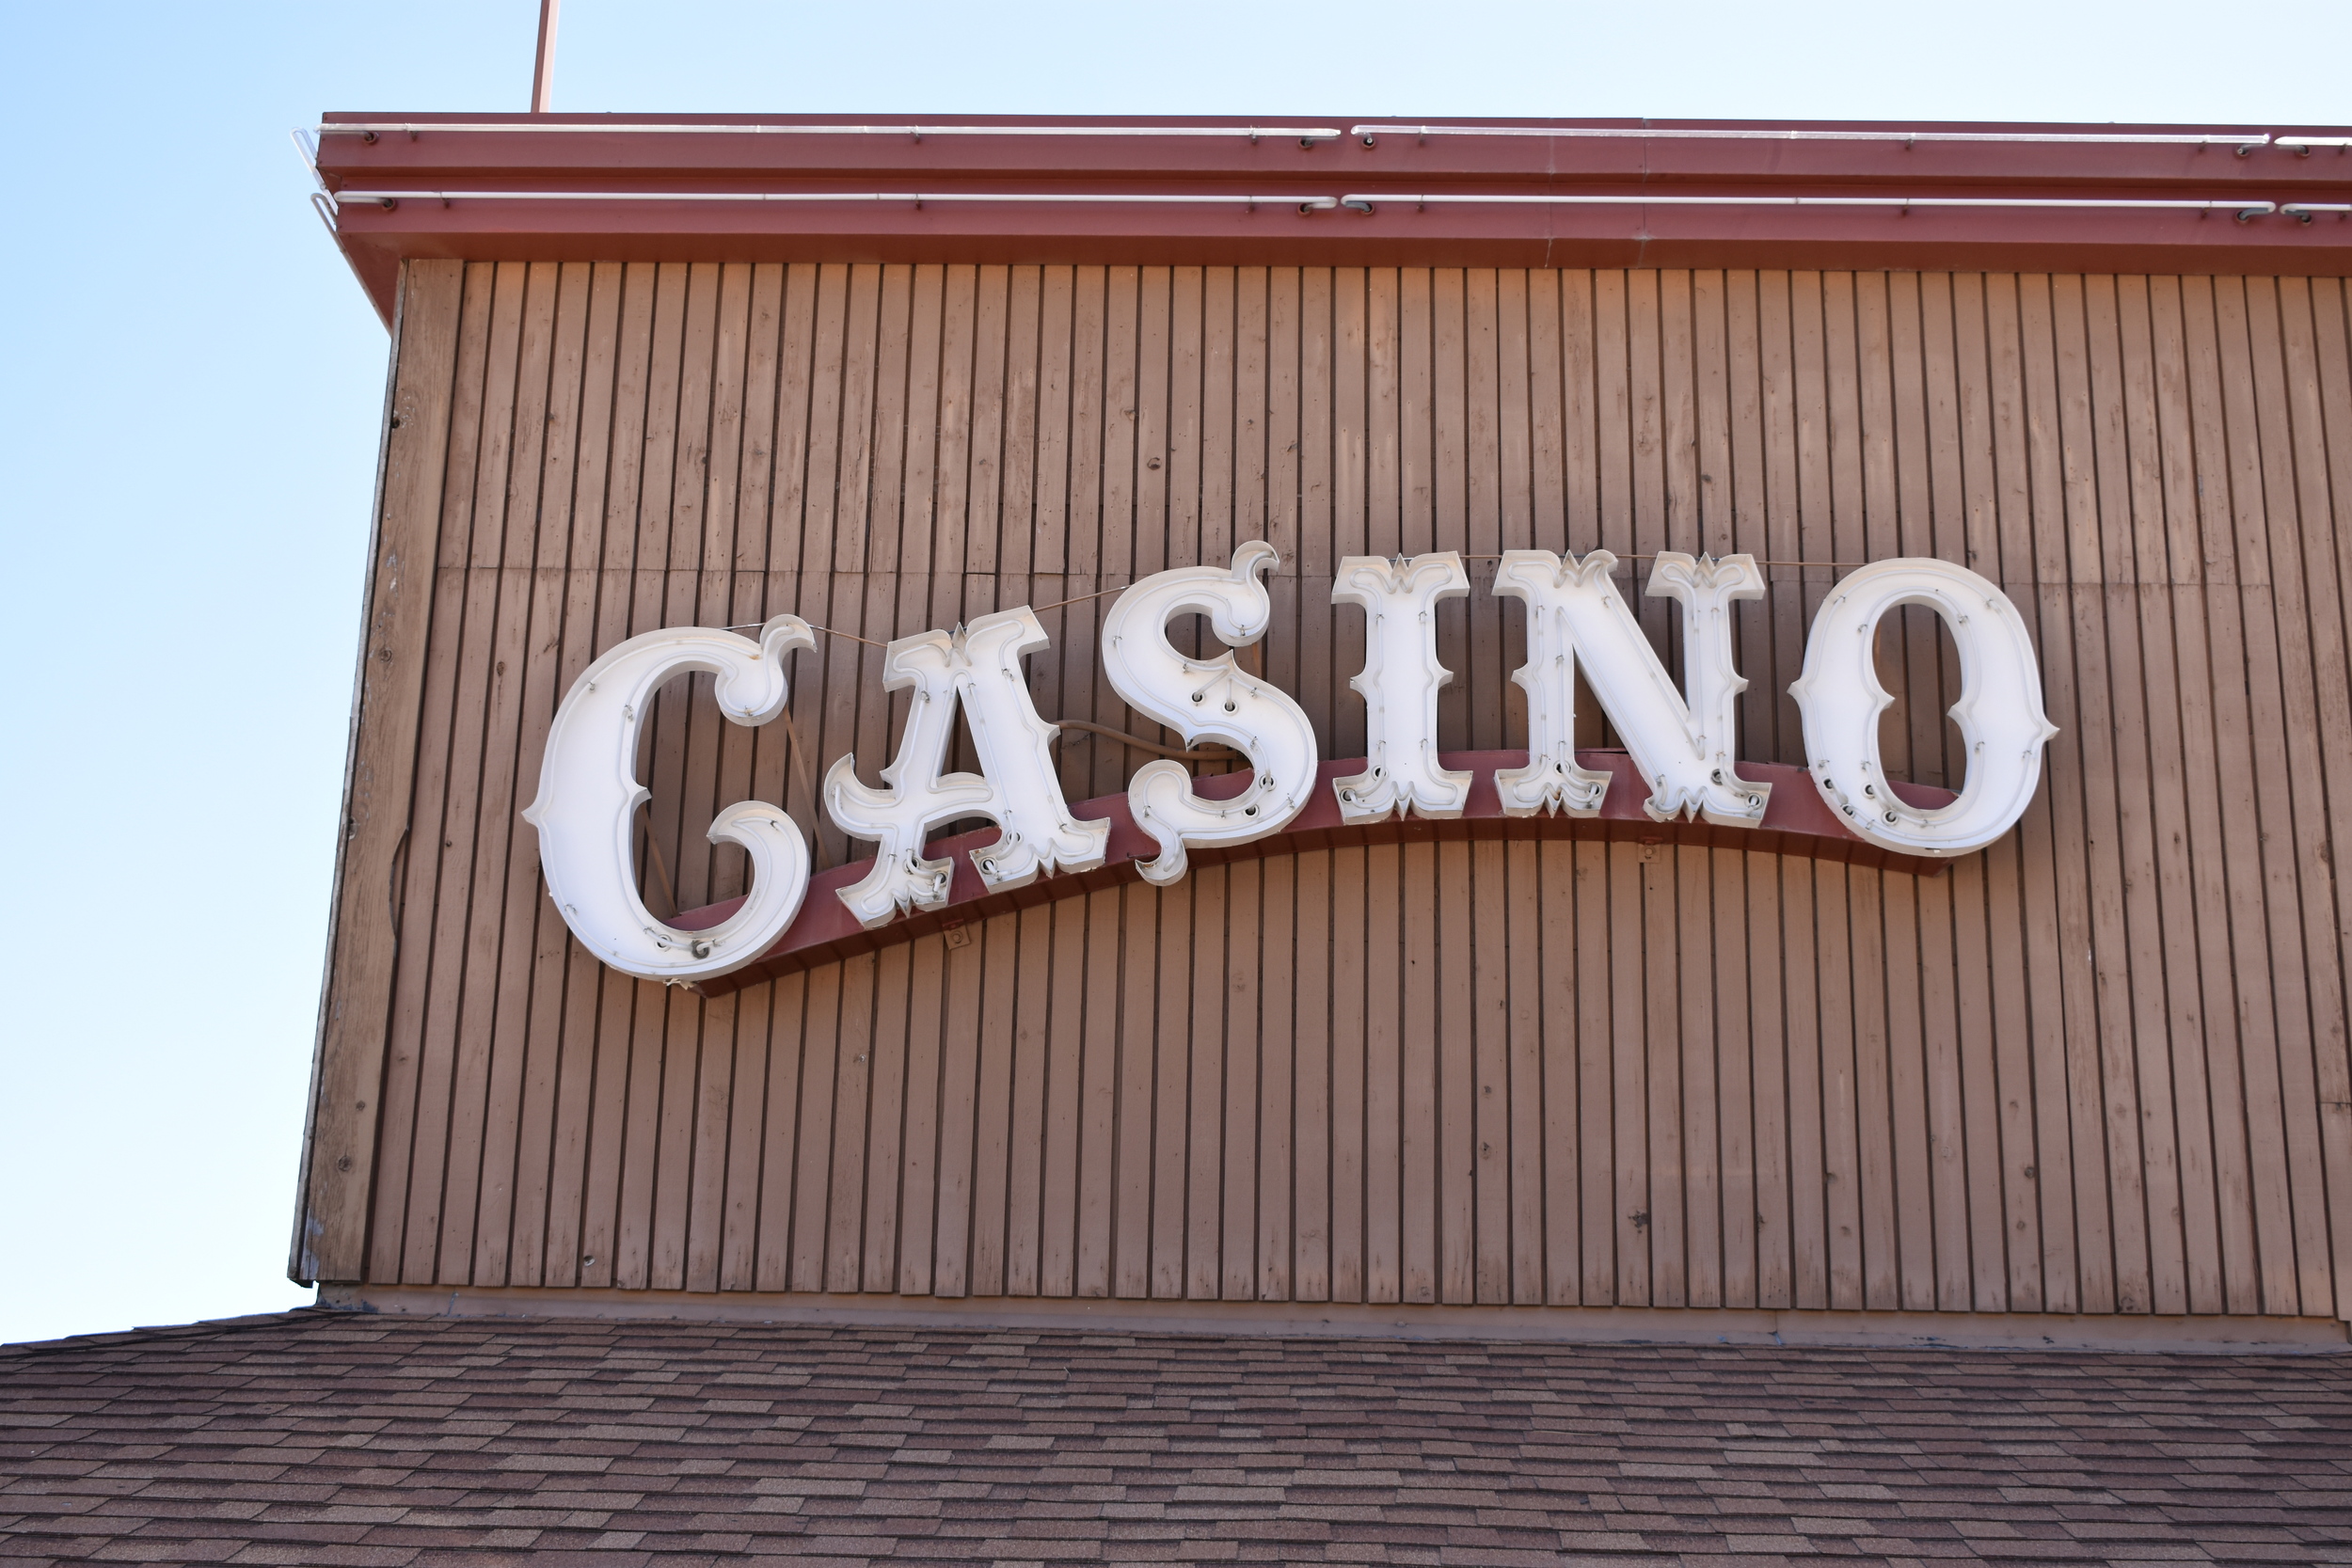 Cactus Pete's Resort Casino wall mounted sign, Jackpot, Nevada